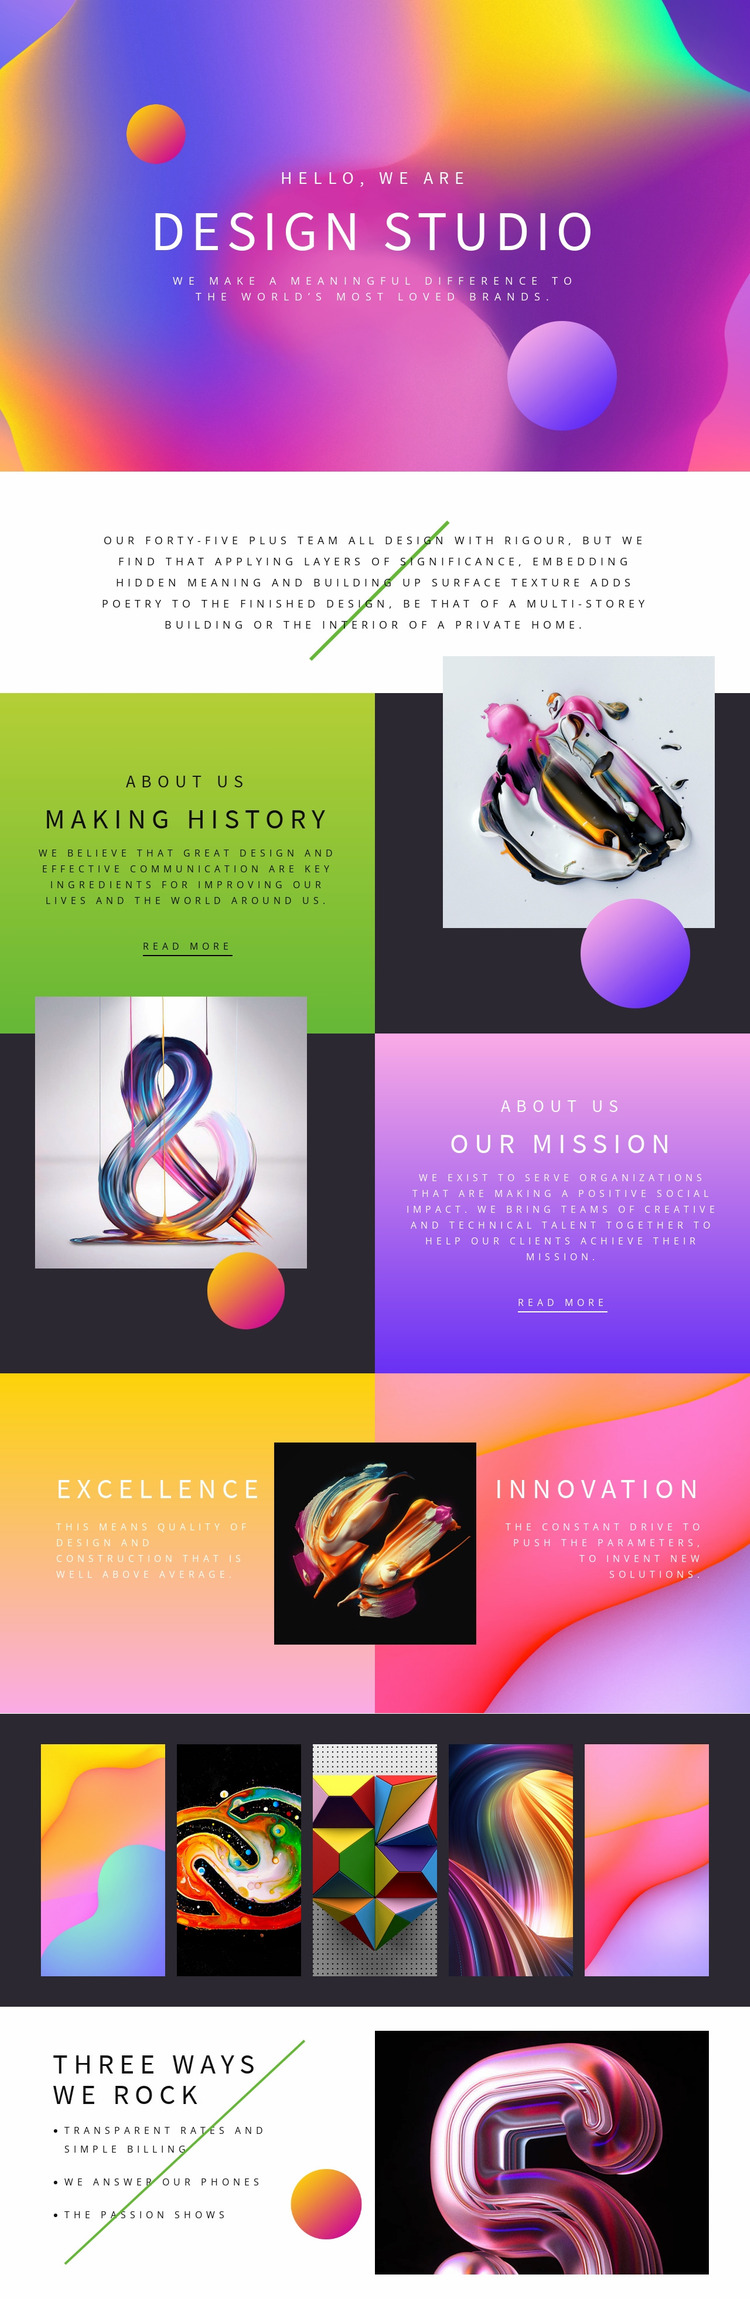 Progressive design art Website Mockup